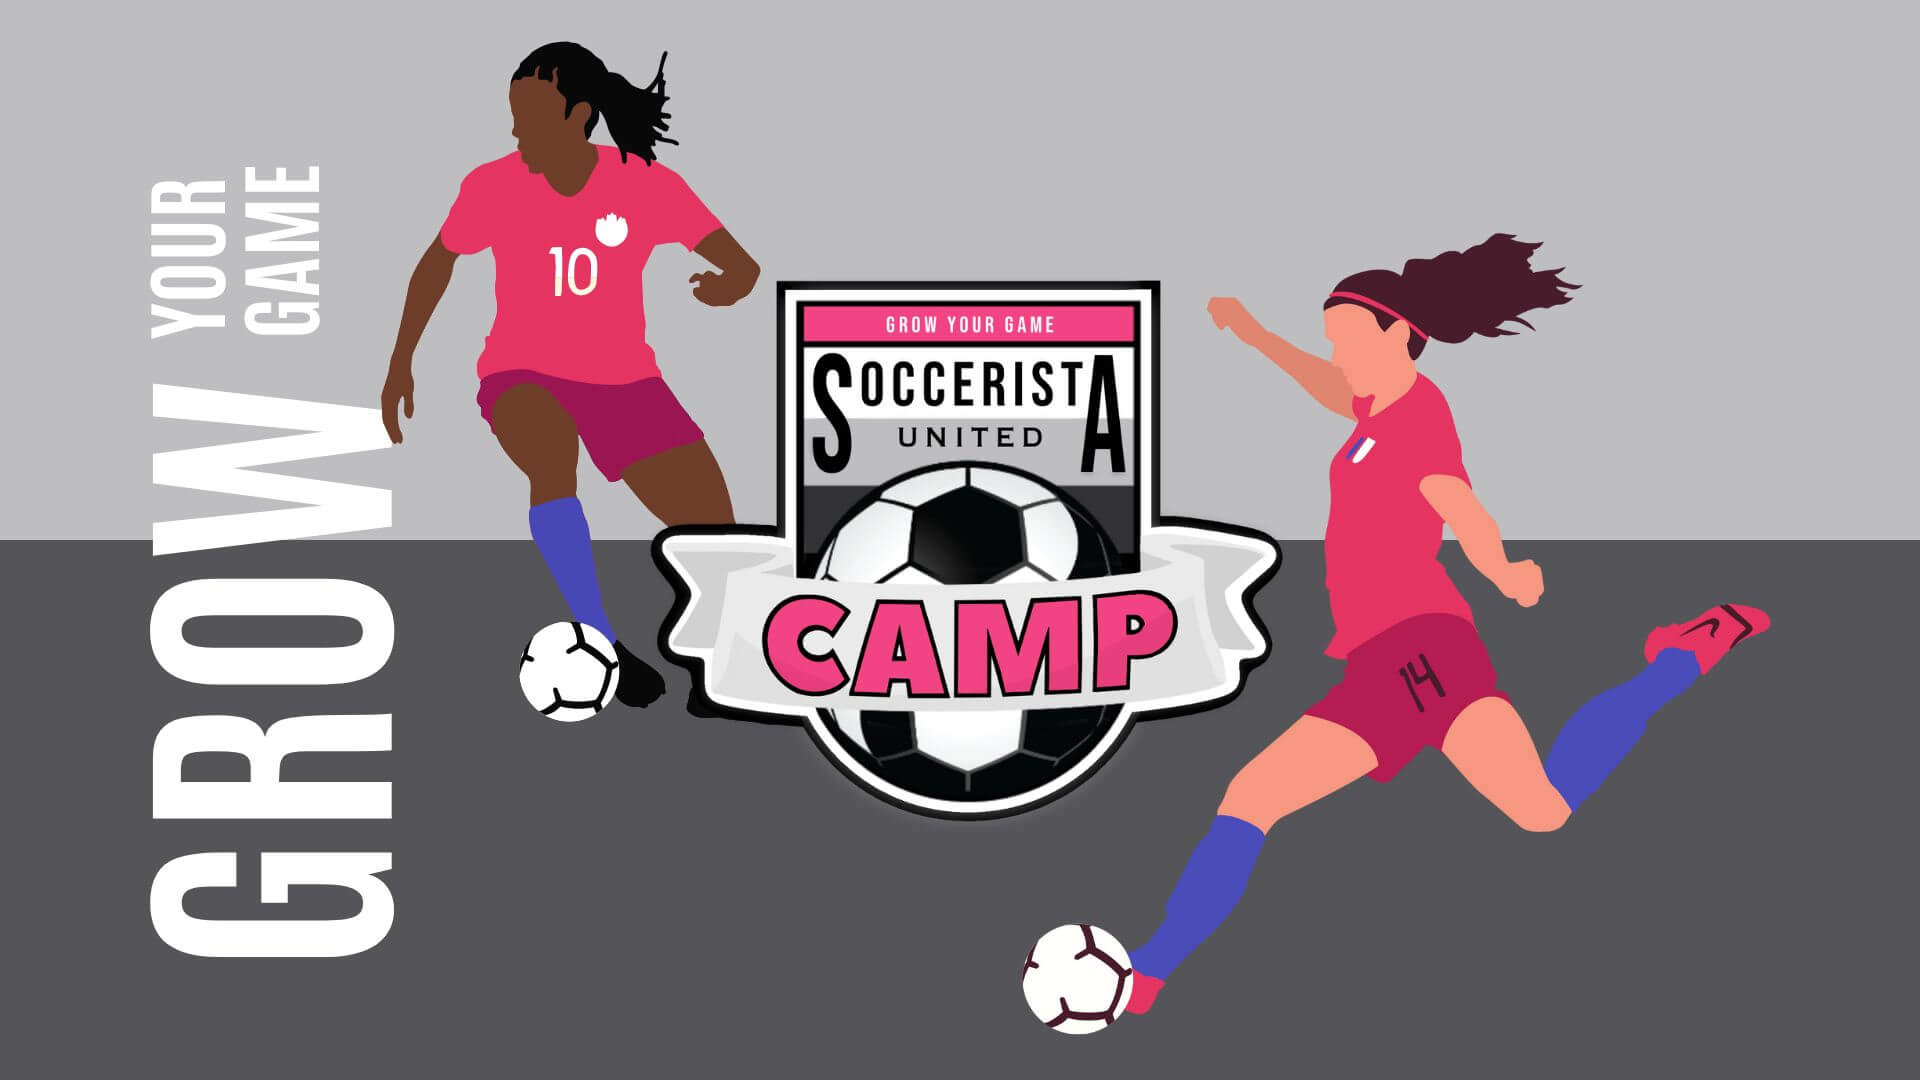 Soccerista United Camp